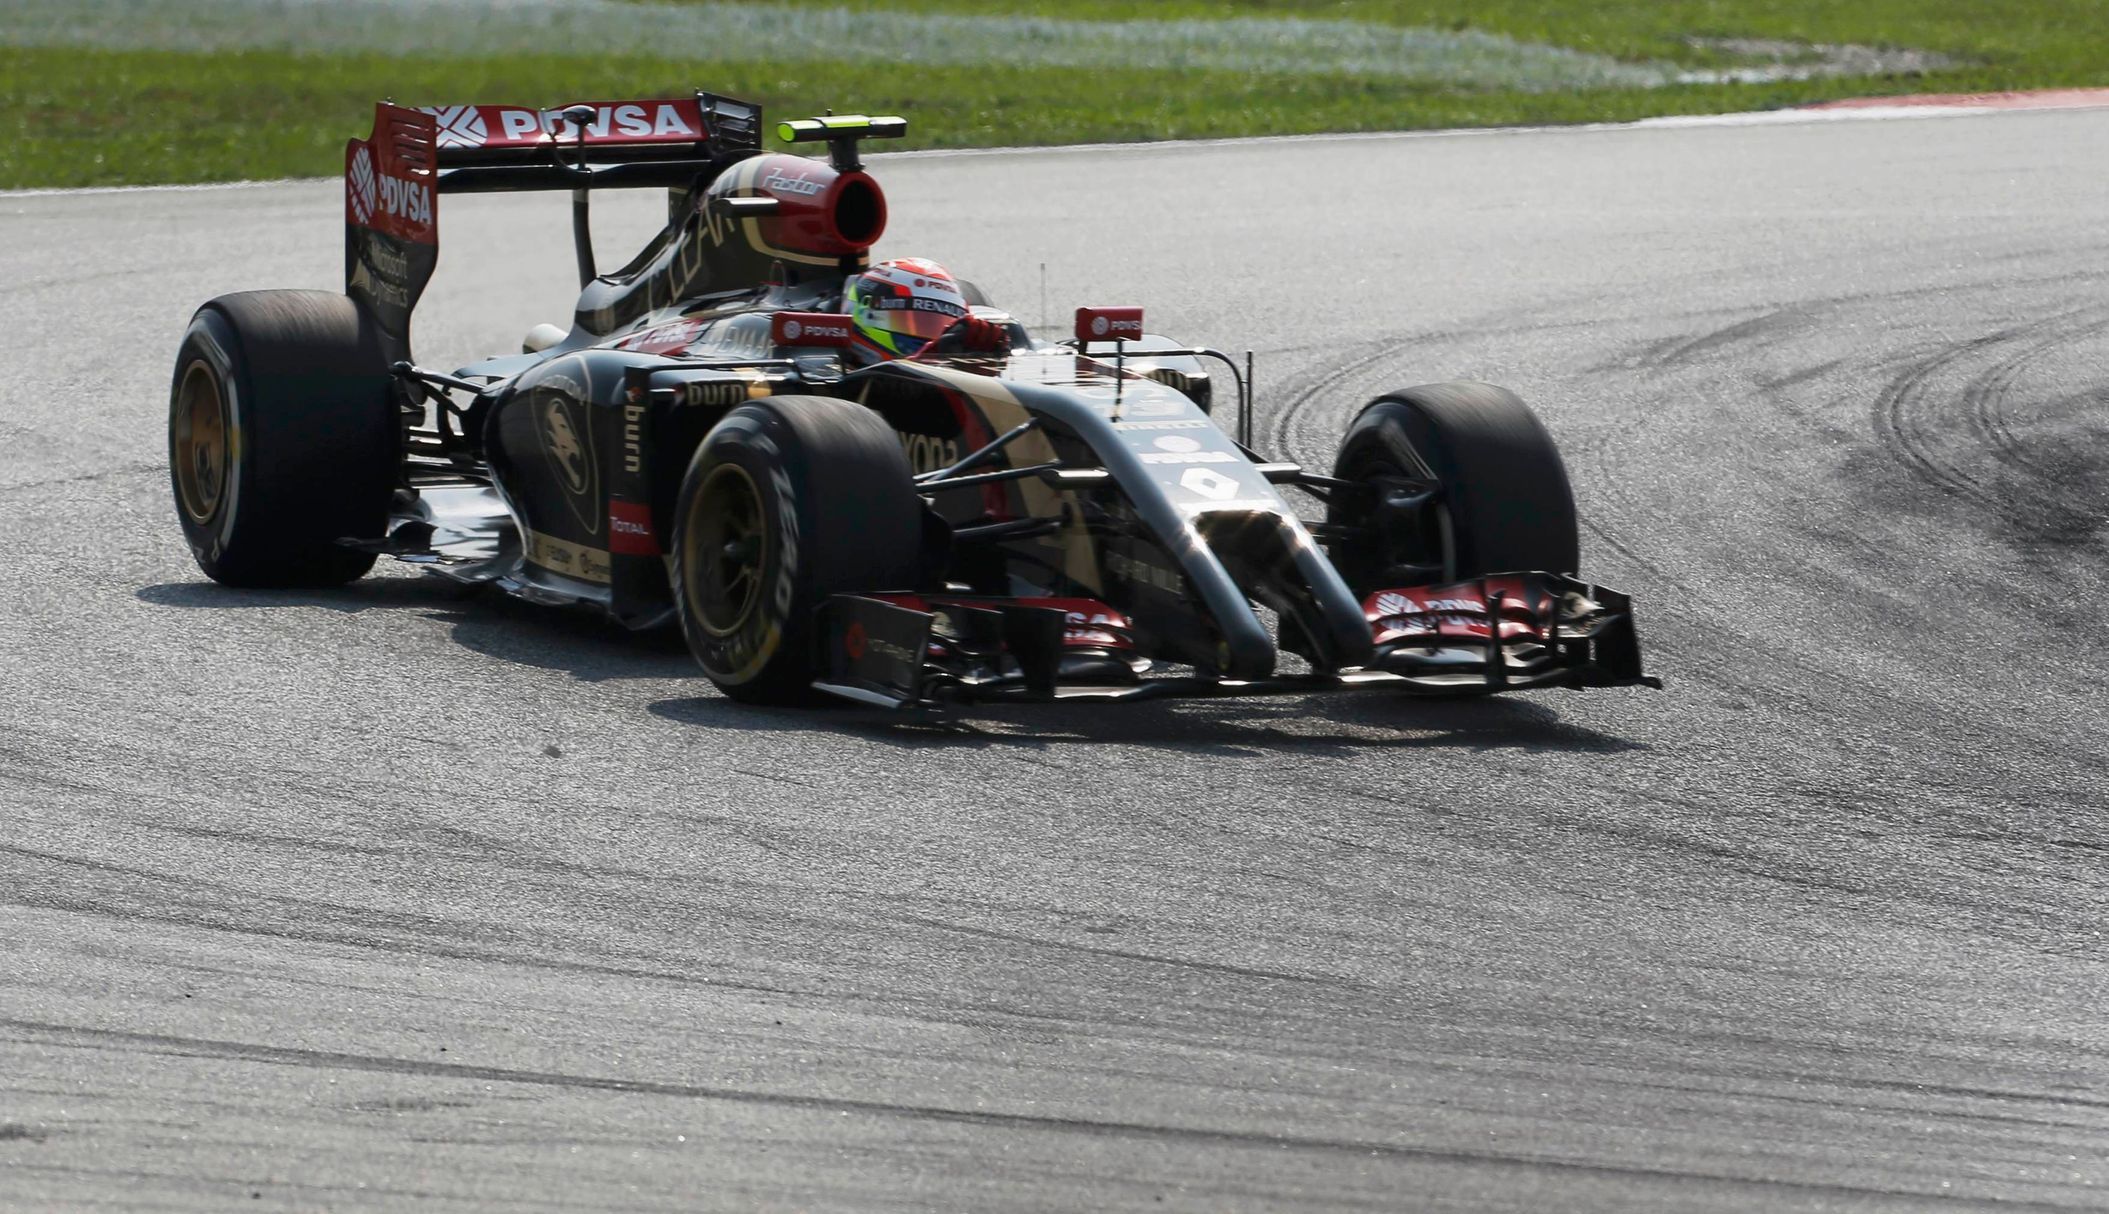 Lotus Formula One driver Maldonado of Venezuela takes a corner during the Malaysian F1 Grand Prix at Sepang International Circuit outside Kuala Lumpur